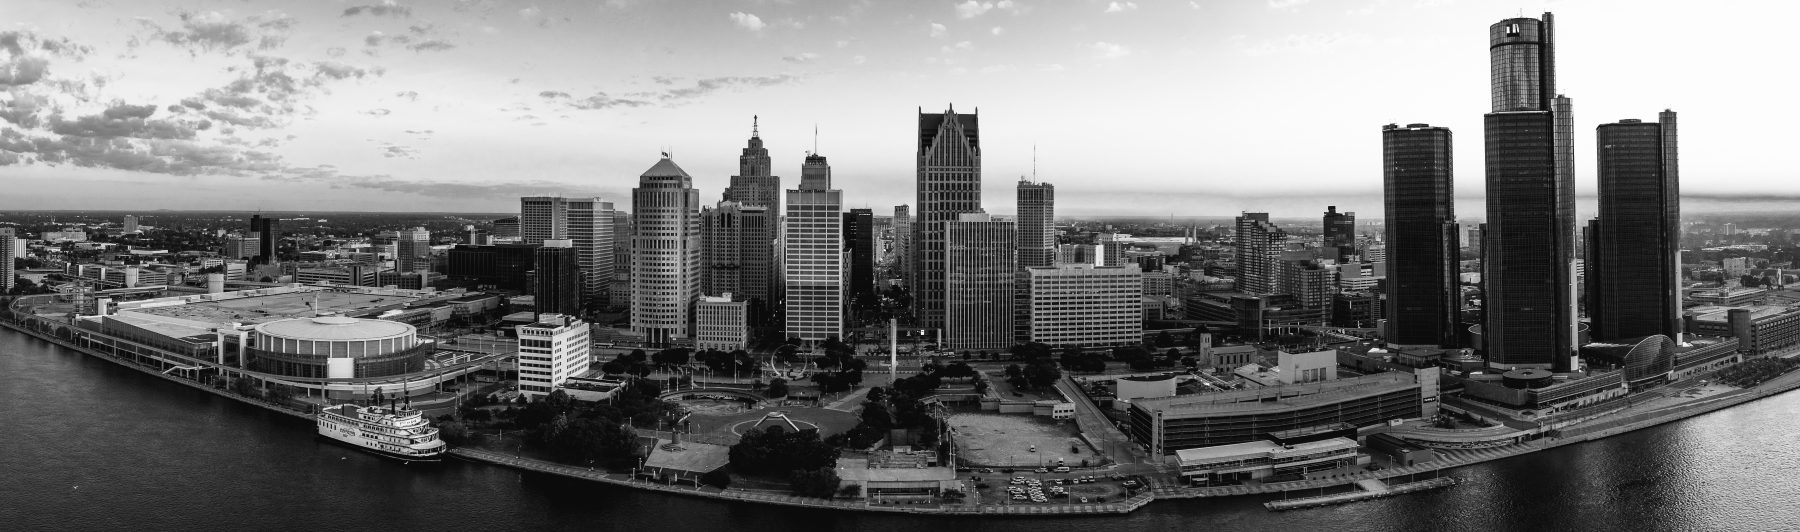 Detroit skyline in grey